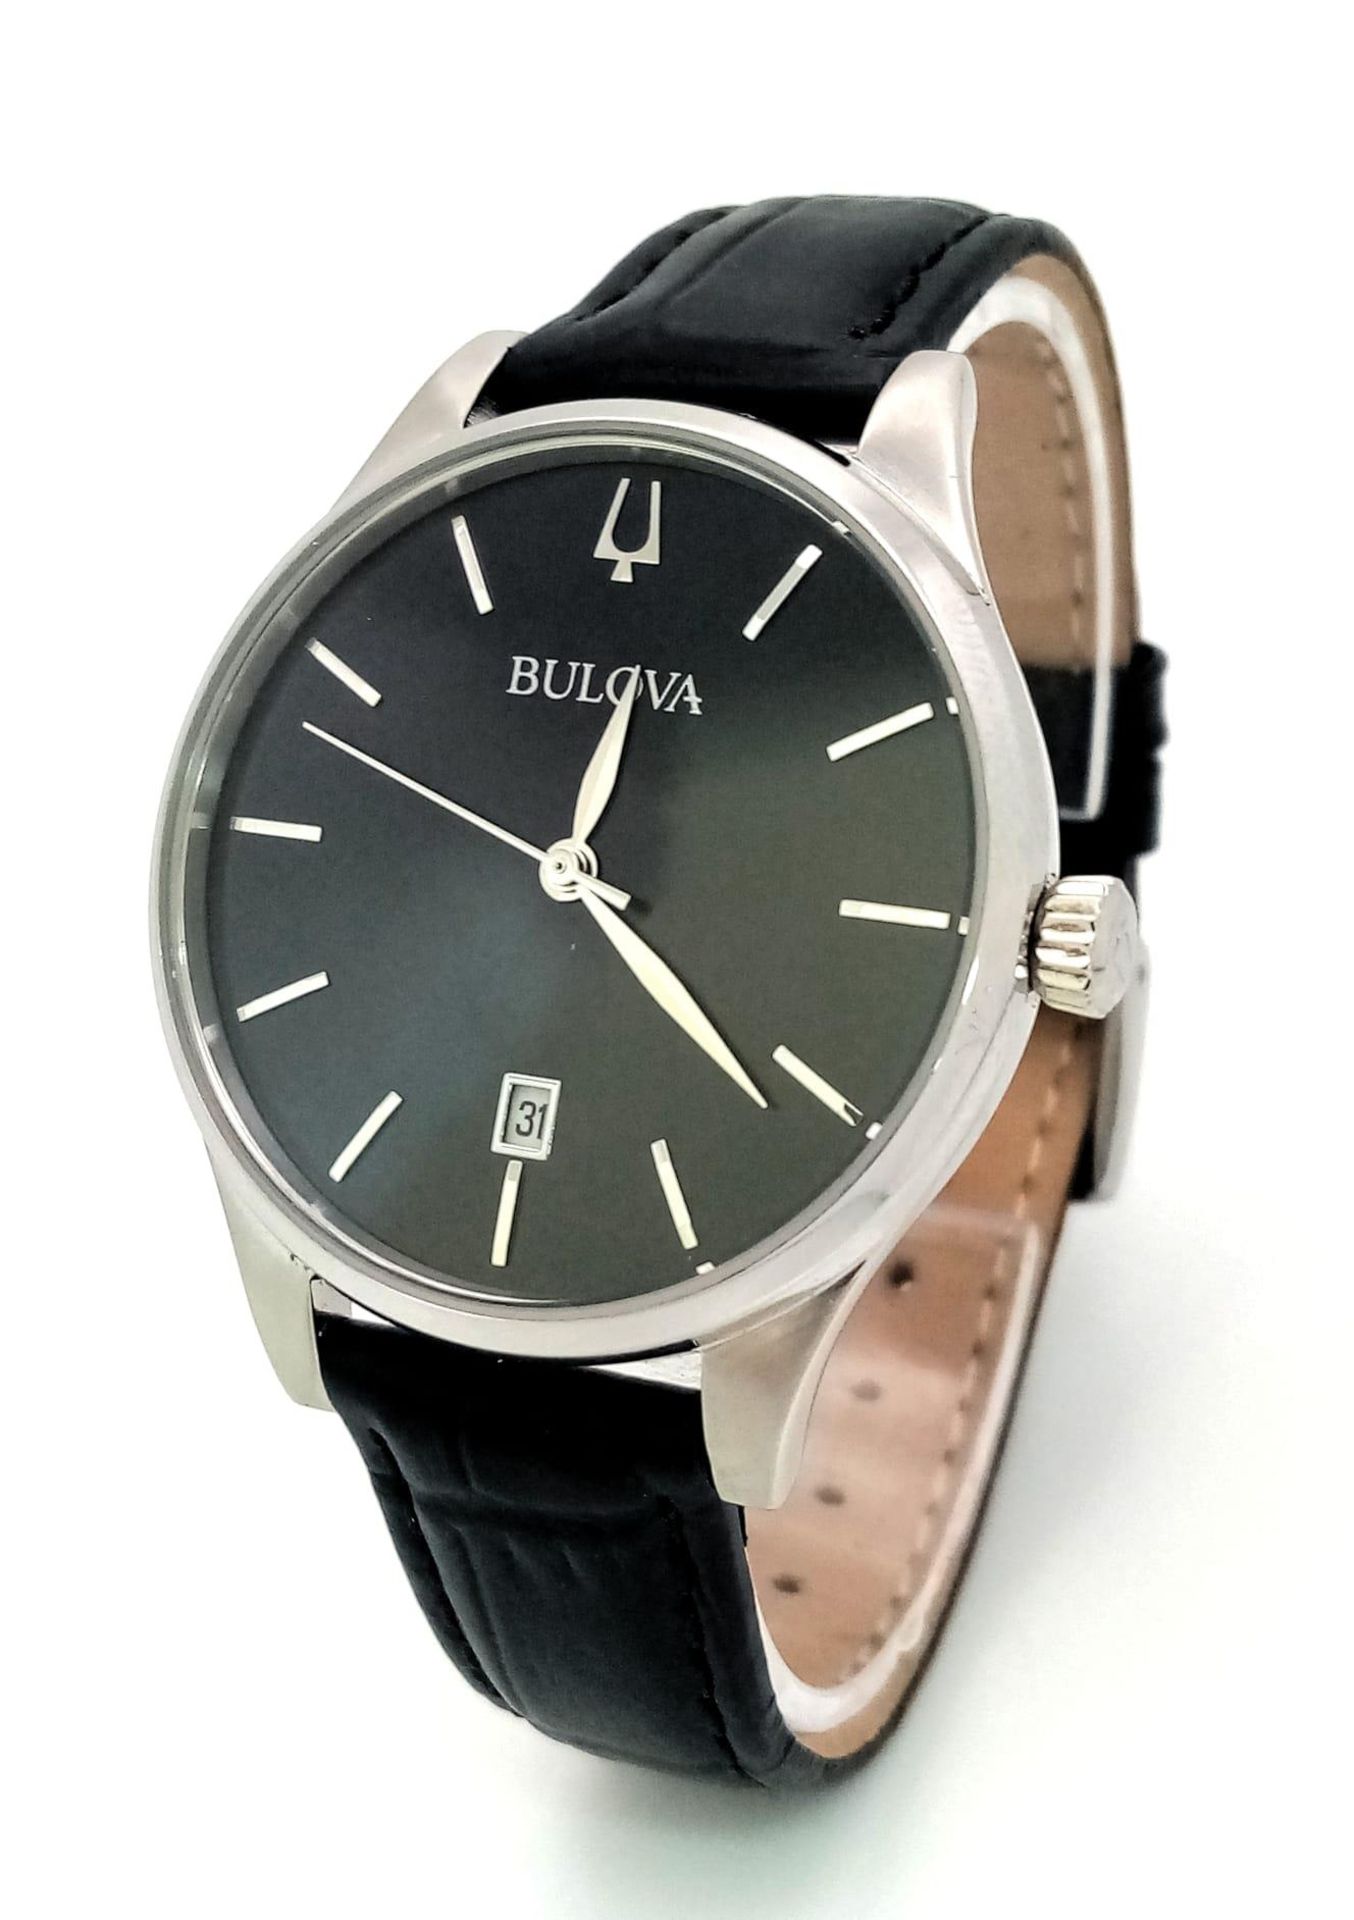 A Classic Bulova Quartz Unisex Watch. Black leather strap. Stainless steel case - 36mm. Black dial